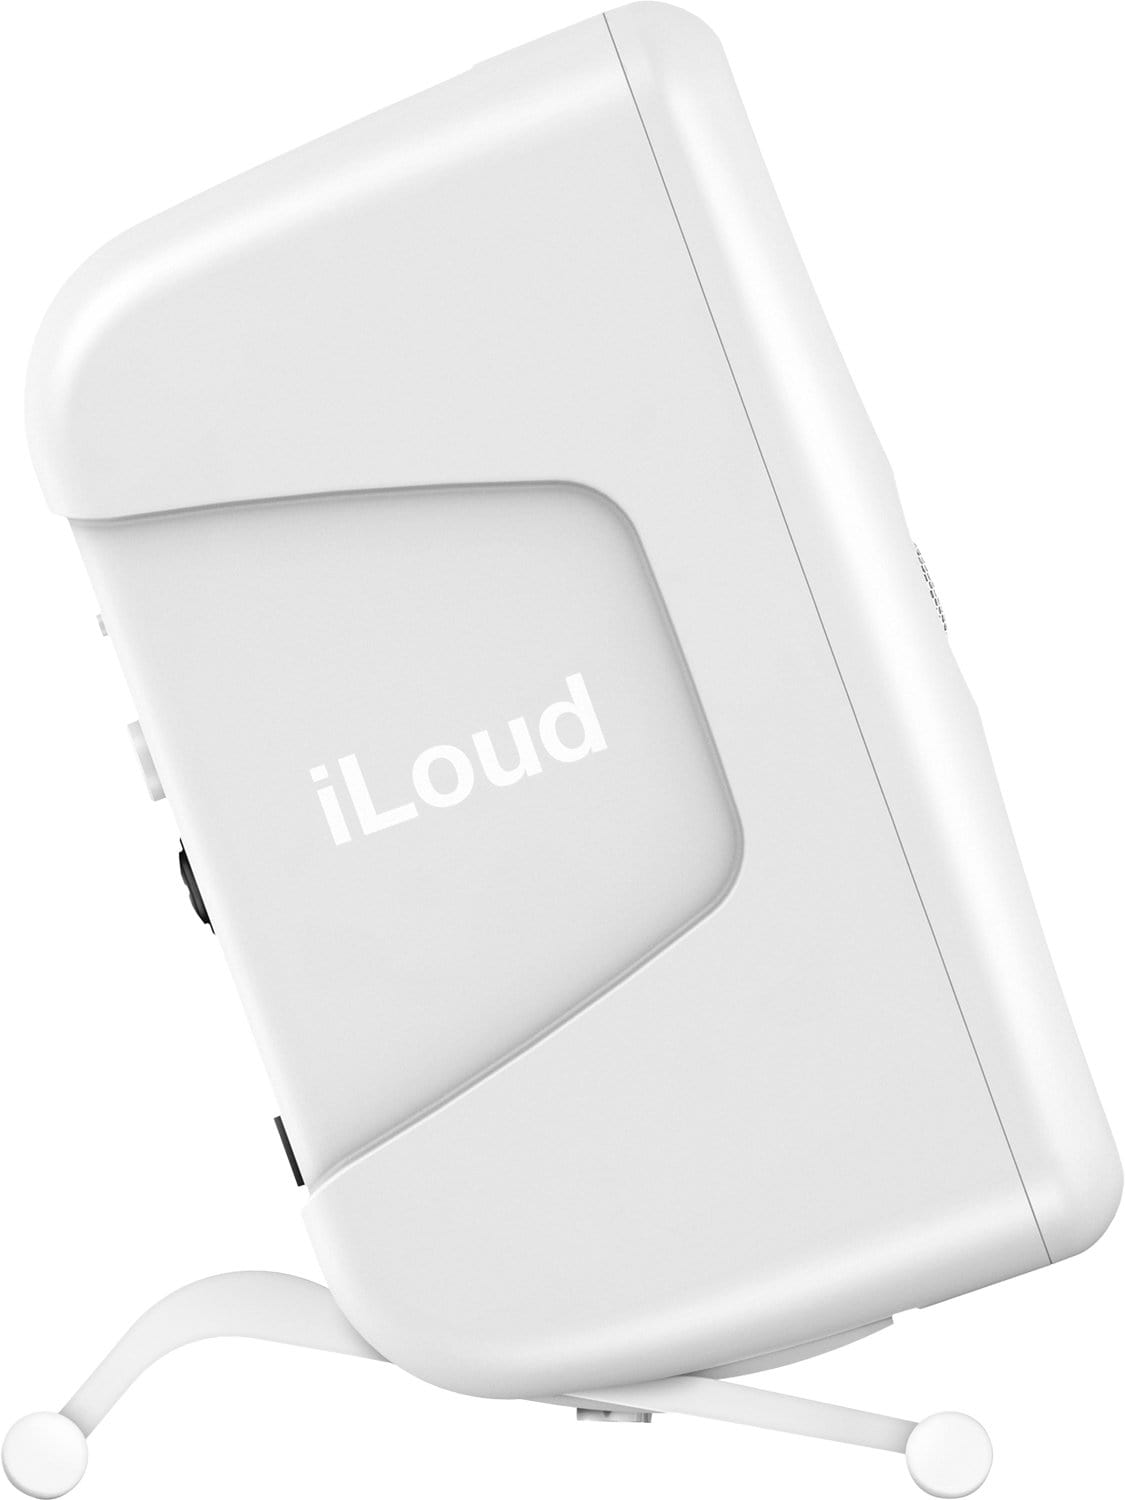 Ik Multimedia Iloud MTM Studio Monitor - White (Single) - PSSL ProSound and Stage Lighting